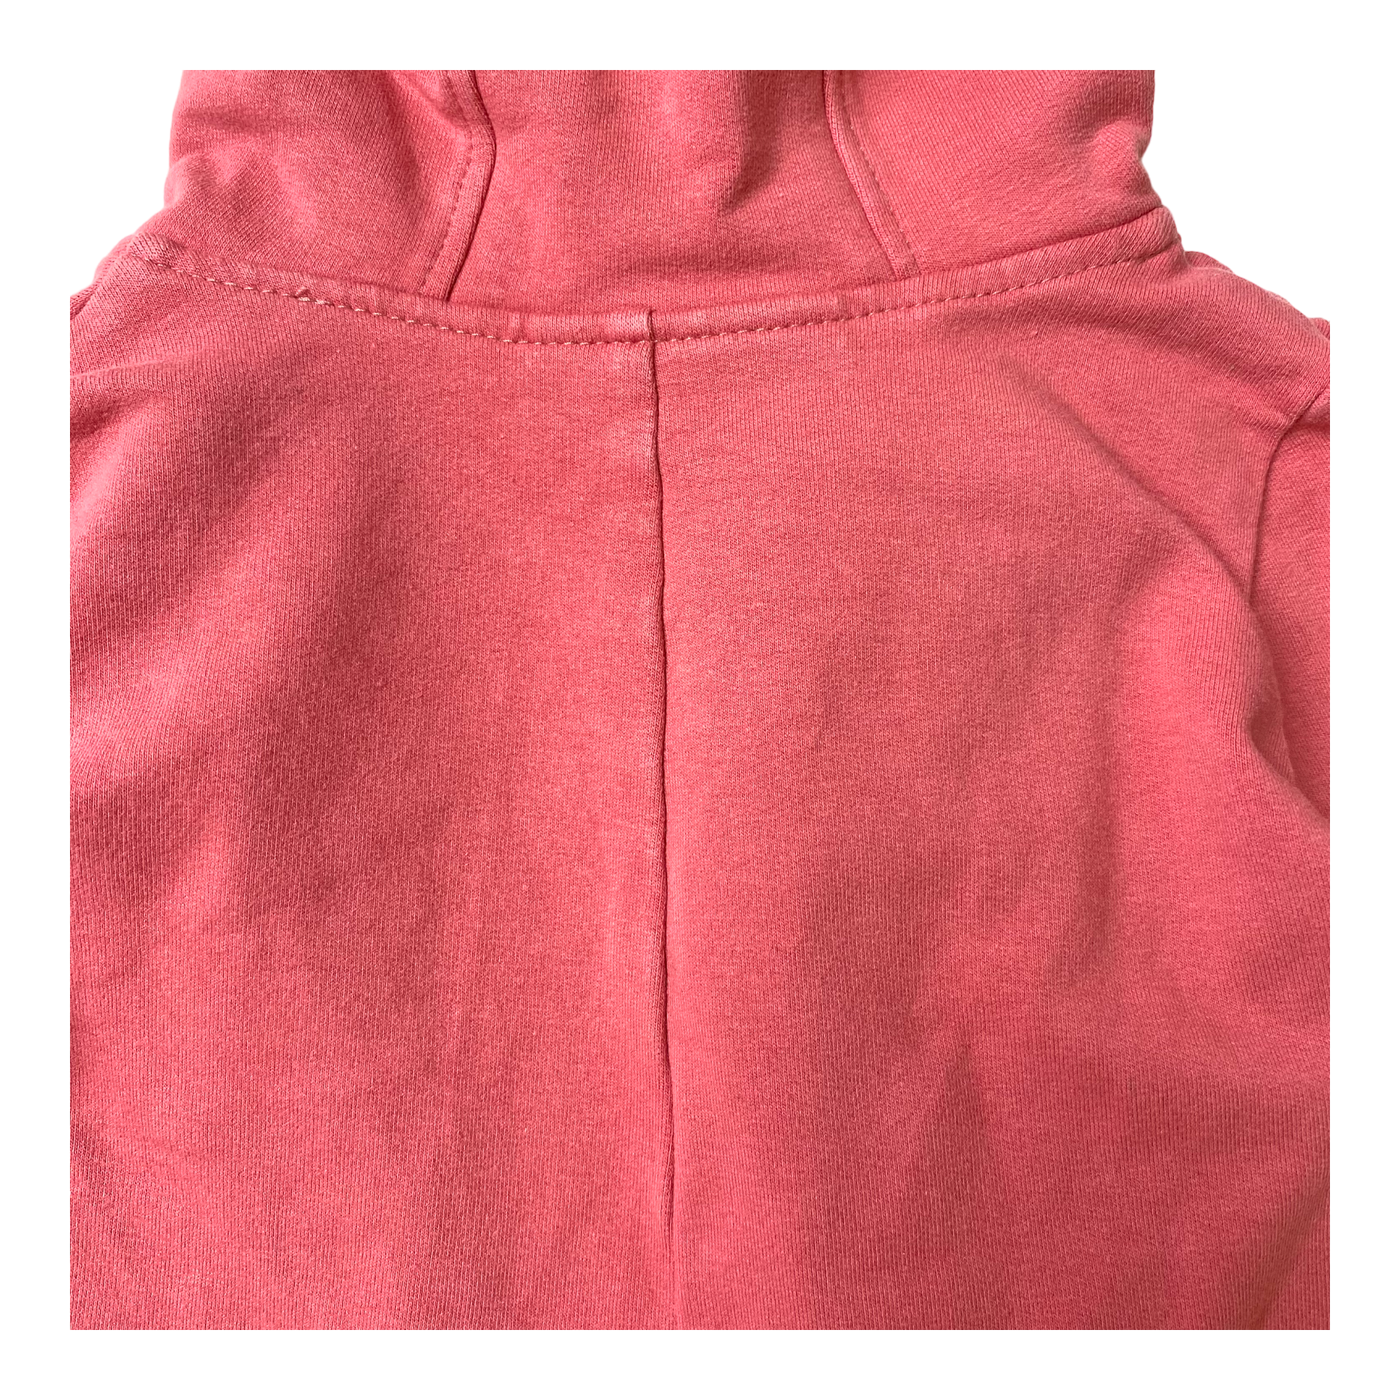 Gugguu sweat jumpsuit, salmon pink | 68cm